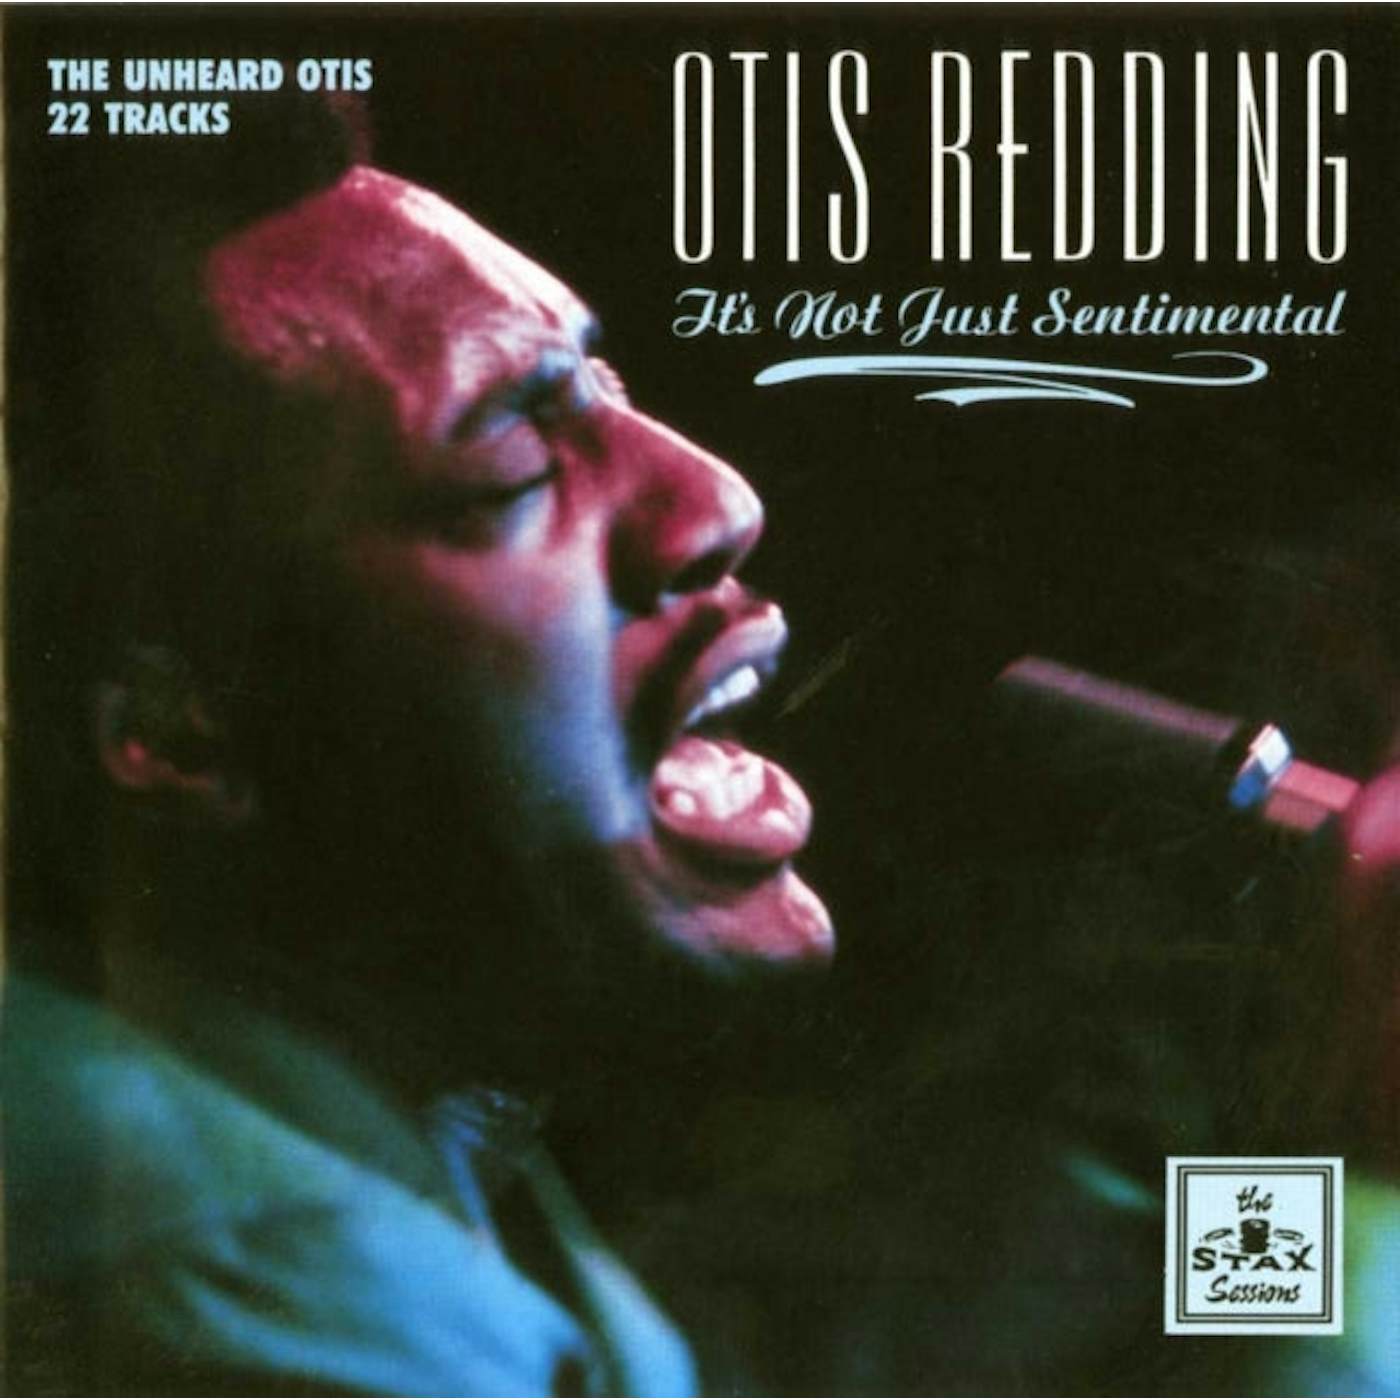 Otis Redding LP Vinyl Record  It's Not Just Sentimental